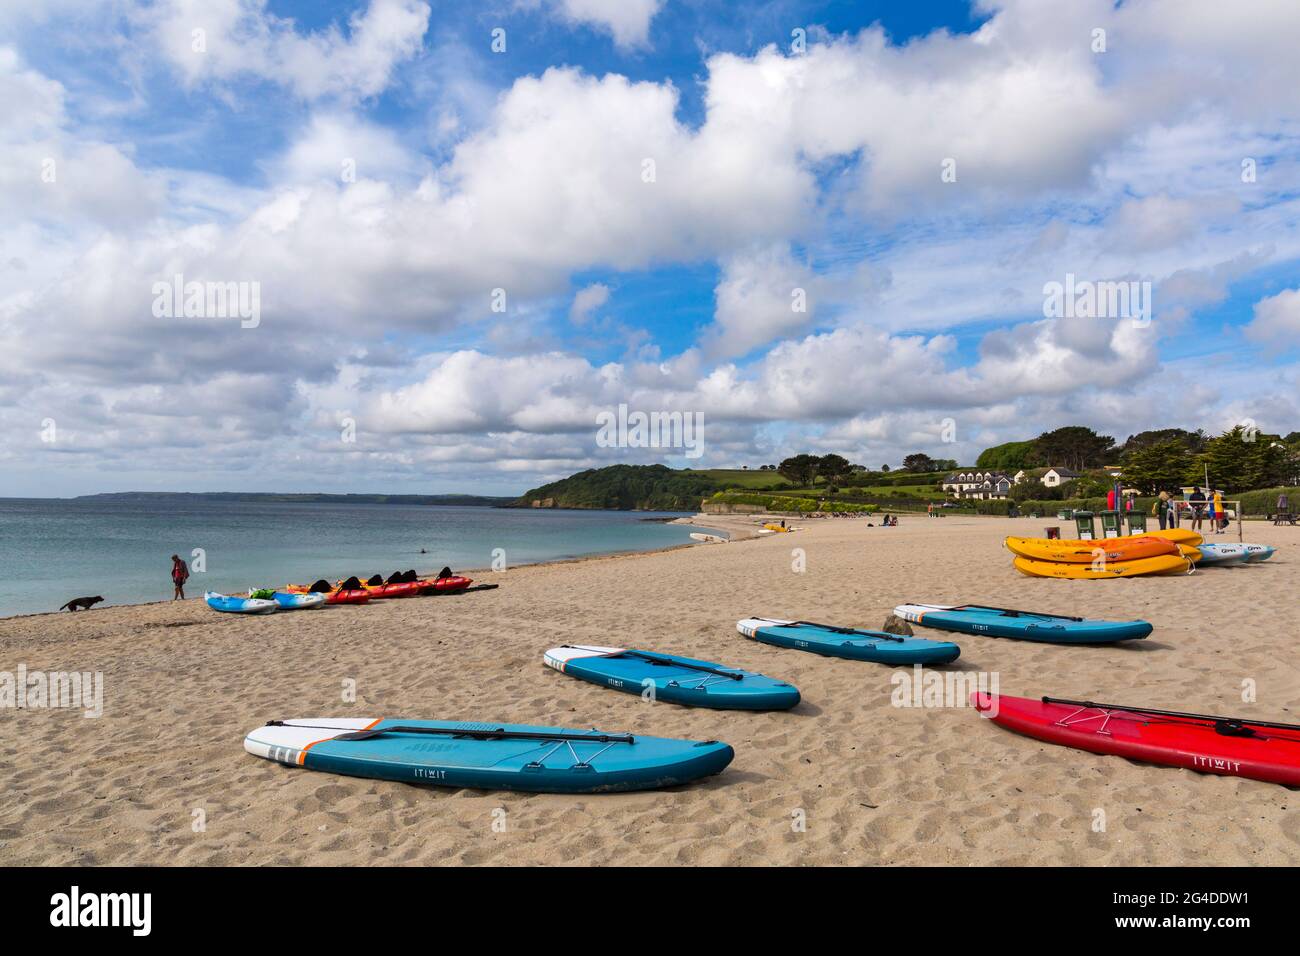 Gyllyngvase beach, Falmouth, Cornwall UK in June - kayaks on the sand Stock Photo